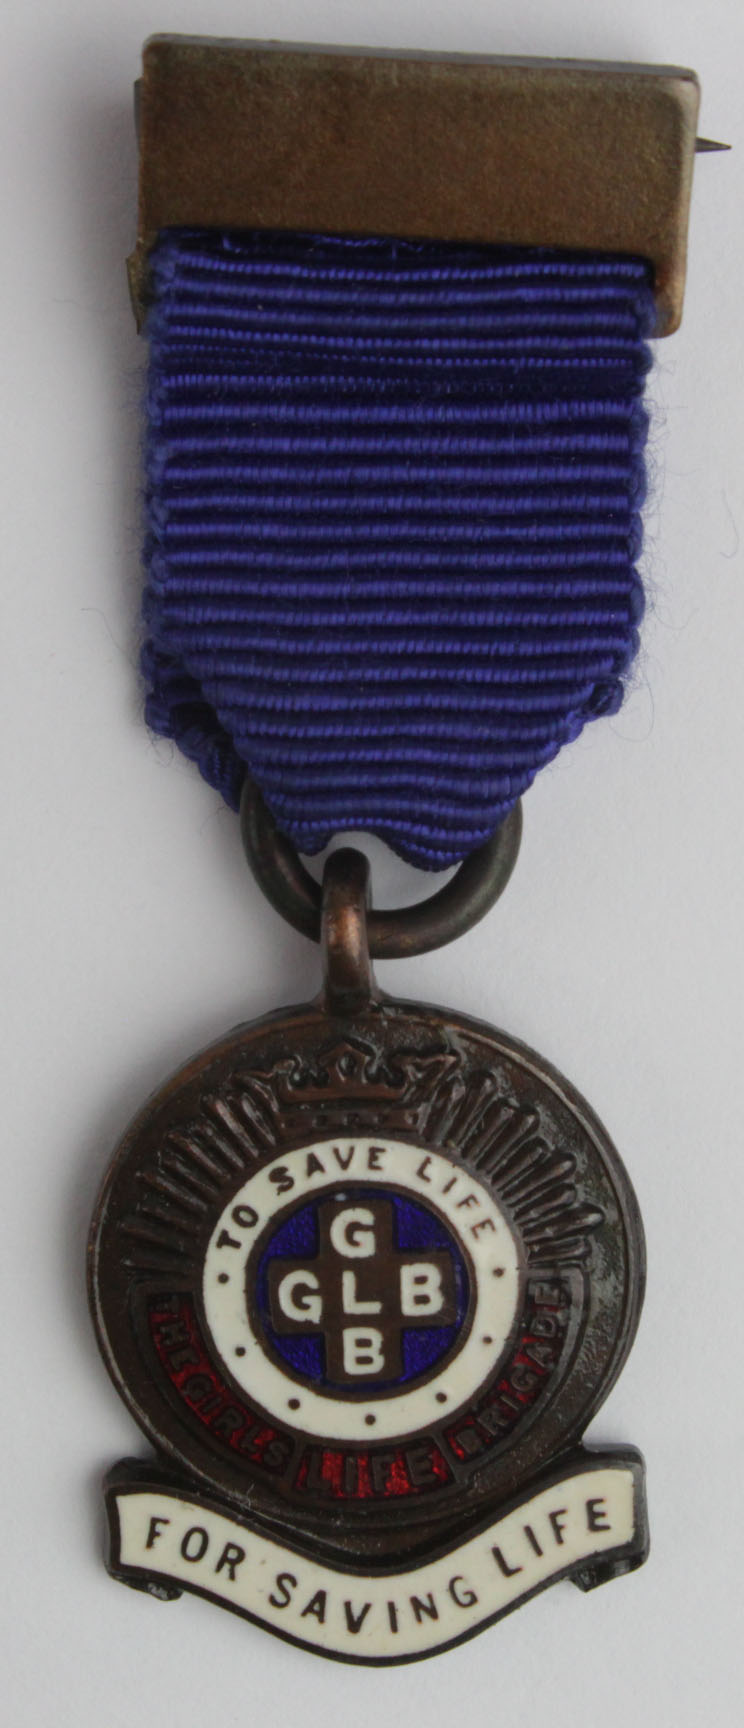 For Saving Life - The Girl's Life Saving bronze & enamel medal (not presented)